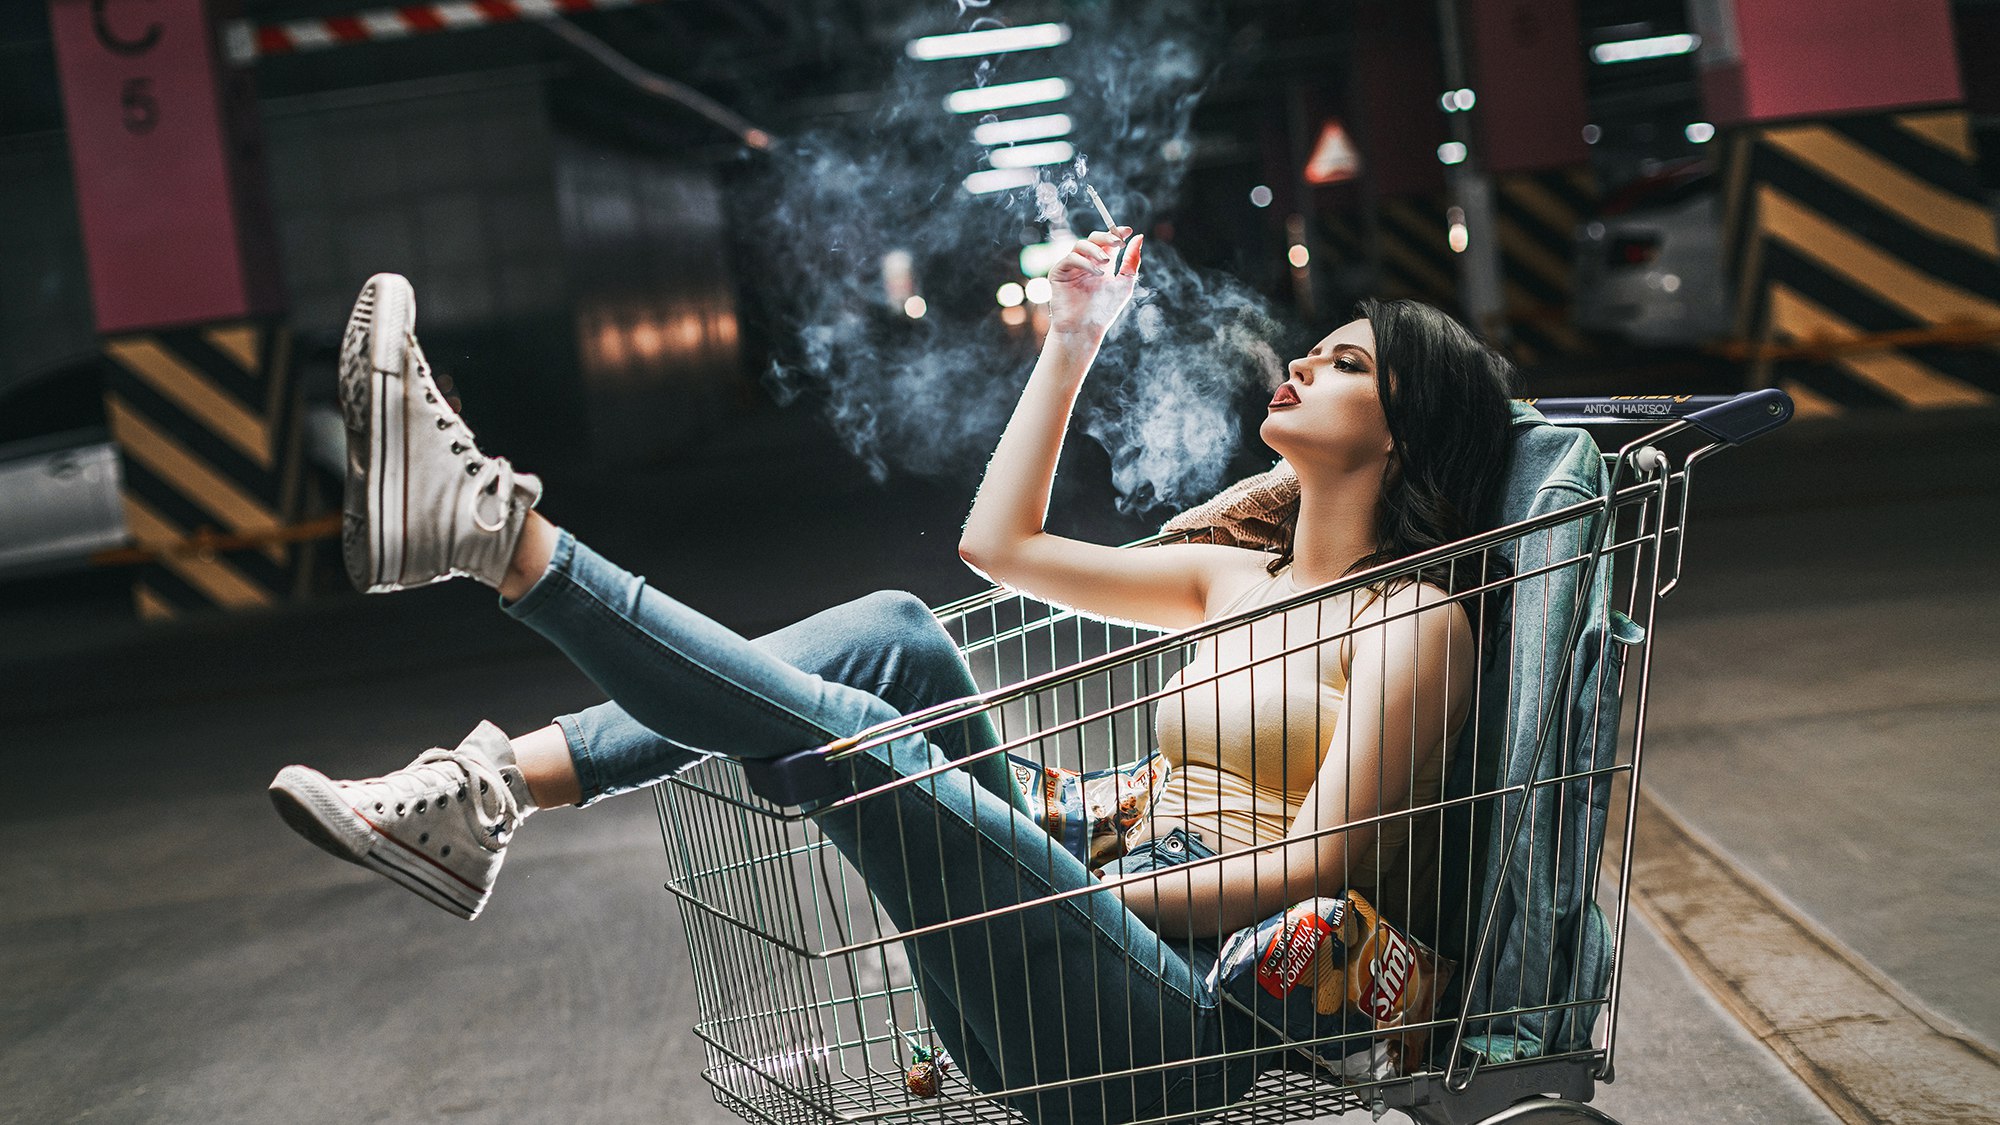 Women Fotoshi Toshi Anton Harisov Sneakers Converse Cigarettes Smoke Pants Jeans Smoking Shopping Ca 2000x1125